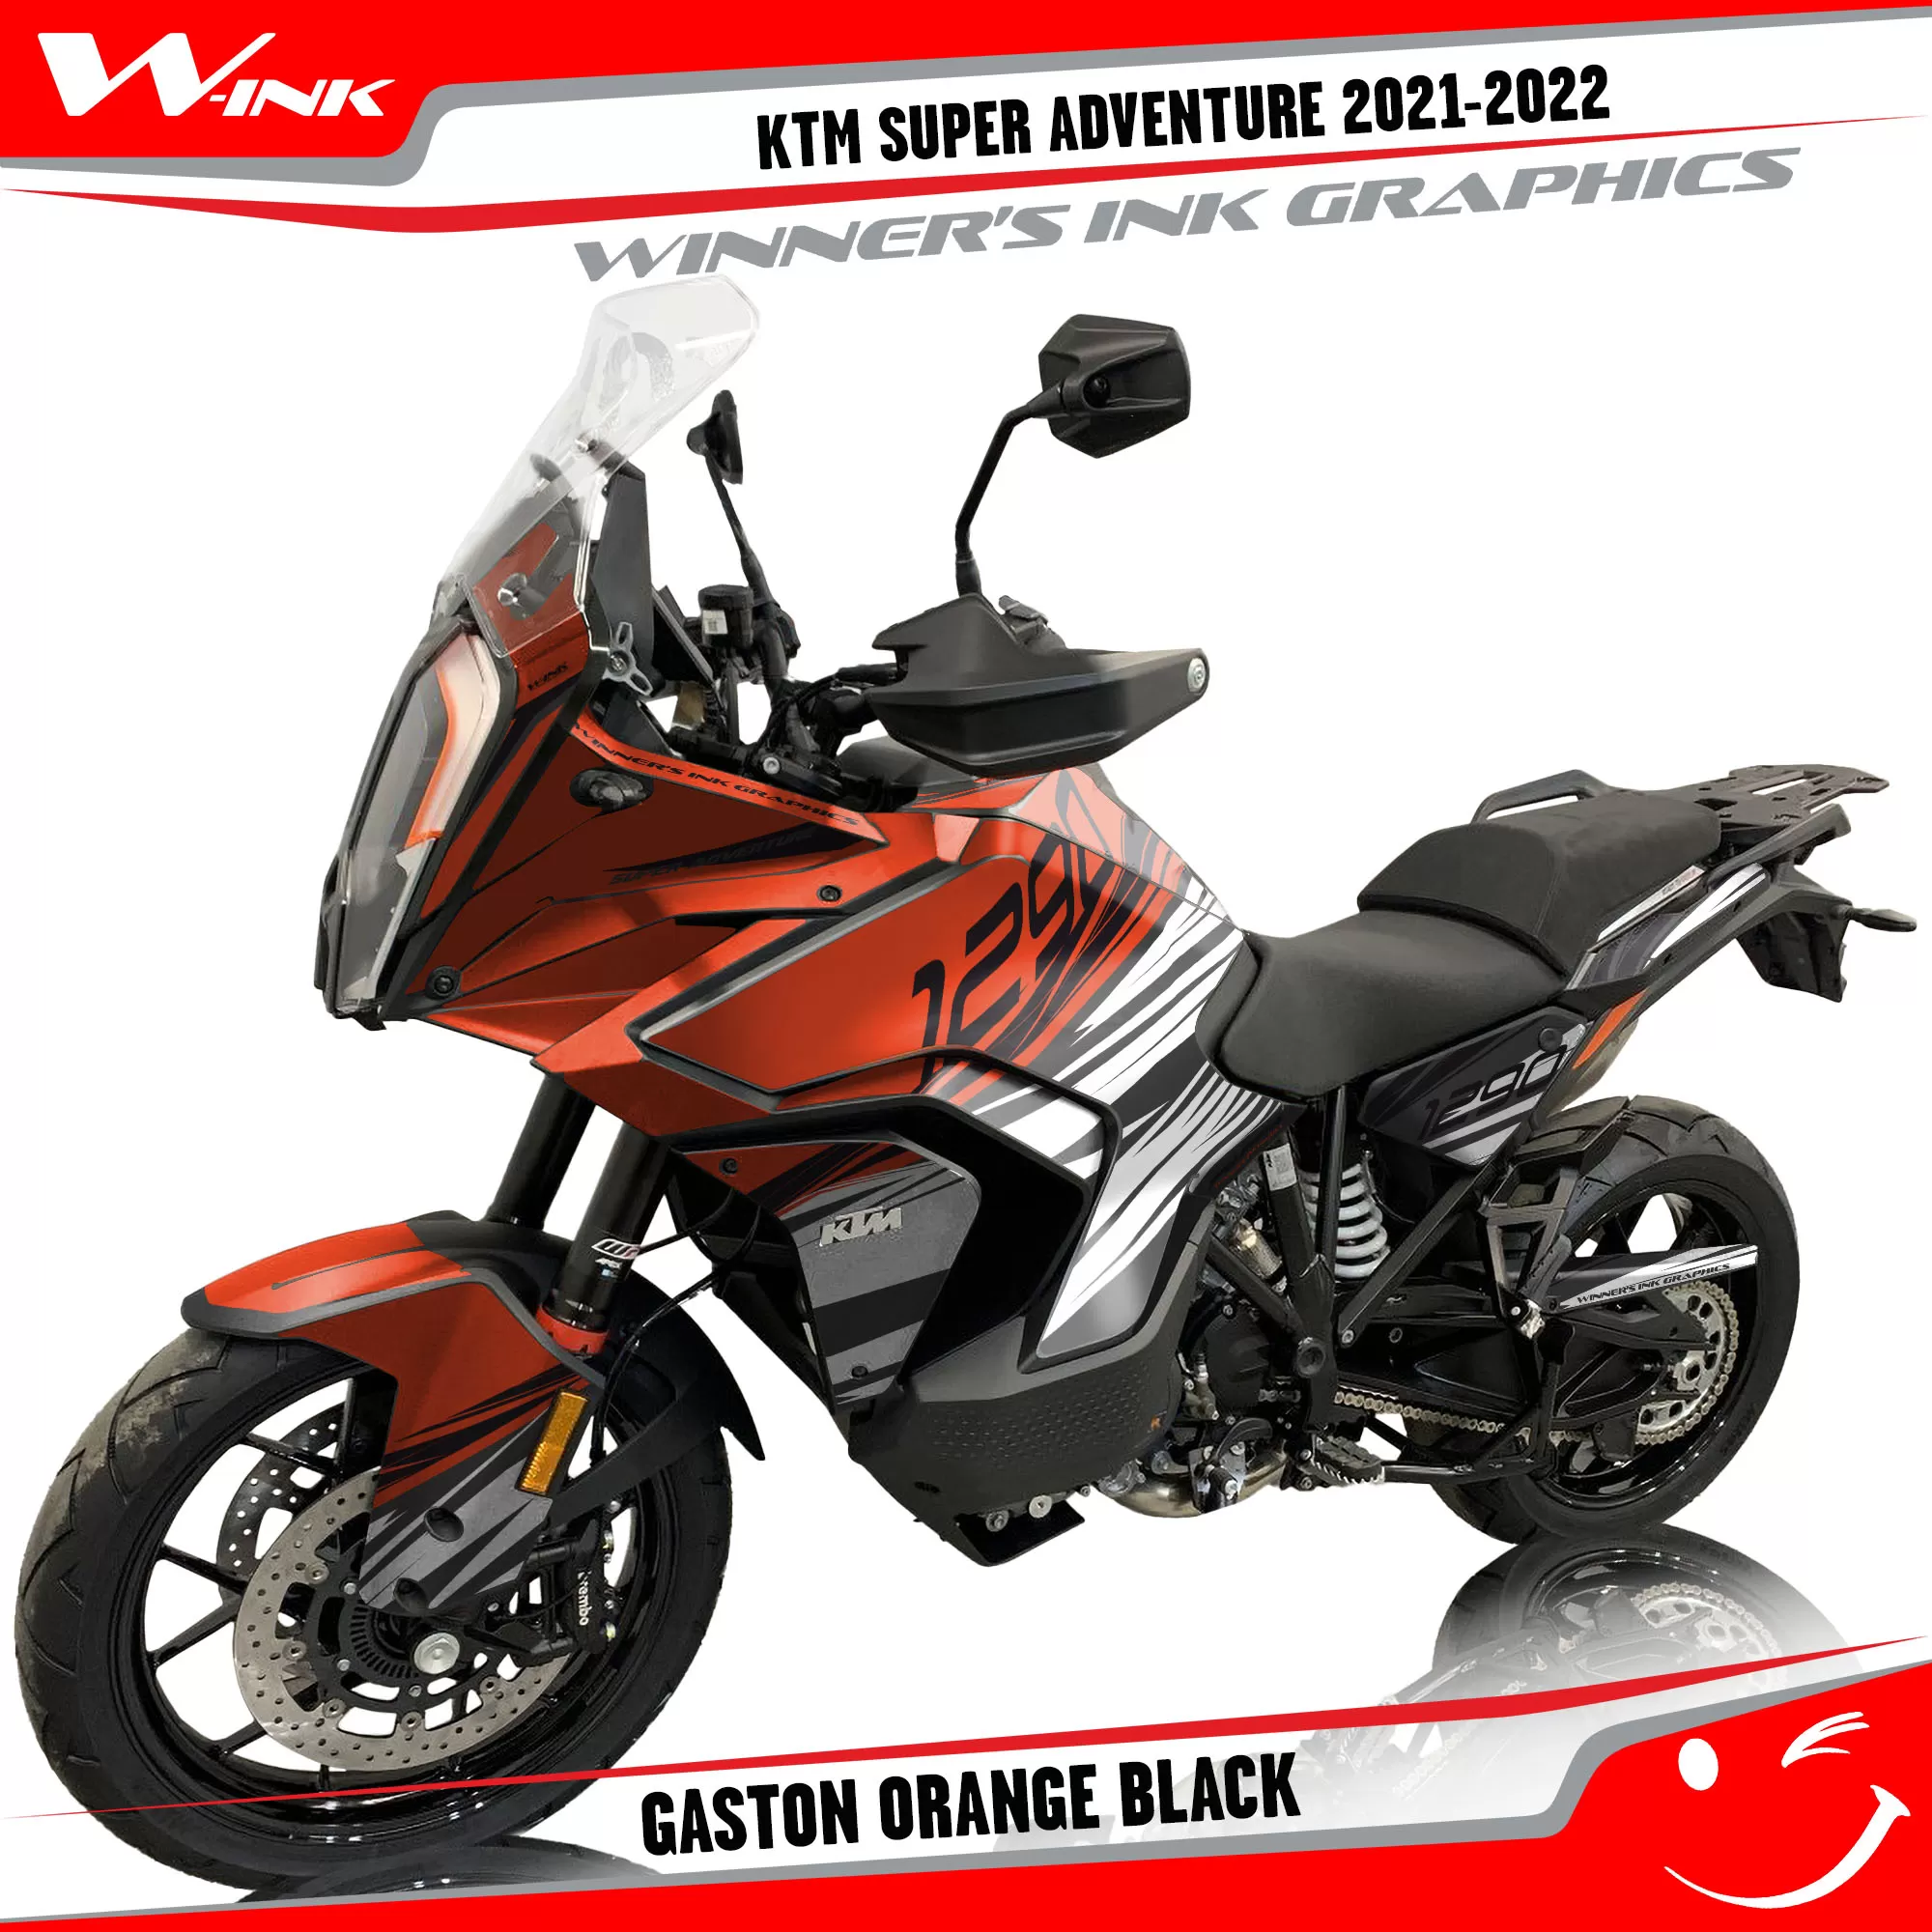 KTM-Super-Adventure-S-2021-2022-graphics-kit-and-decals-with-designs-Gaston-Orange-Black